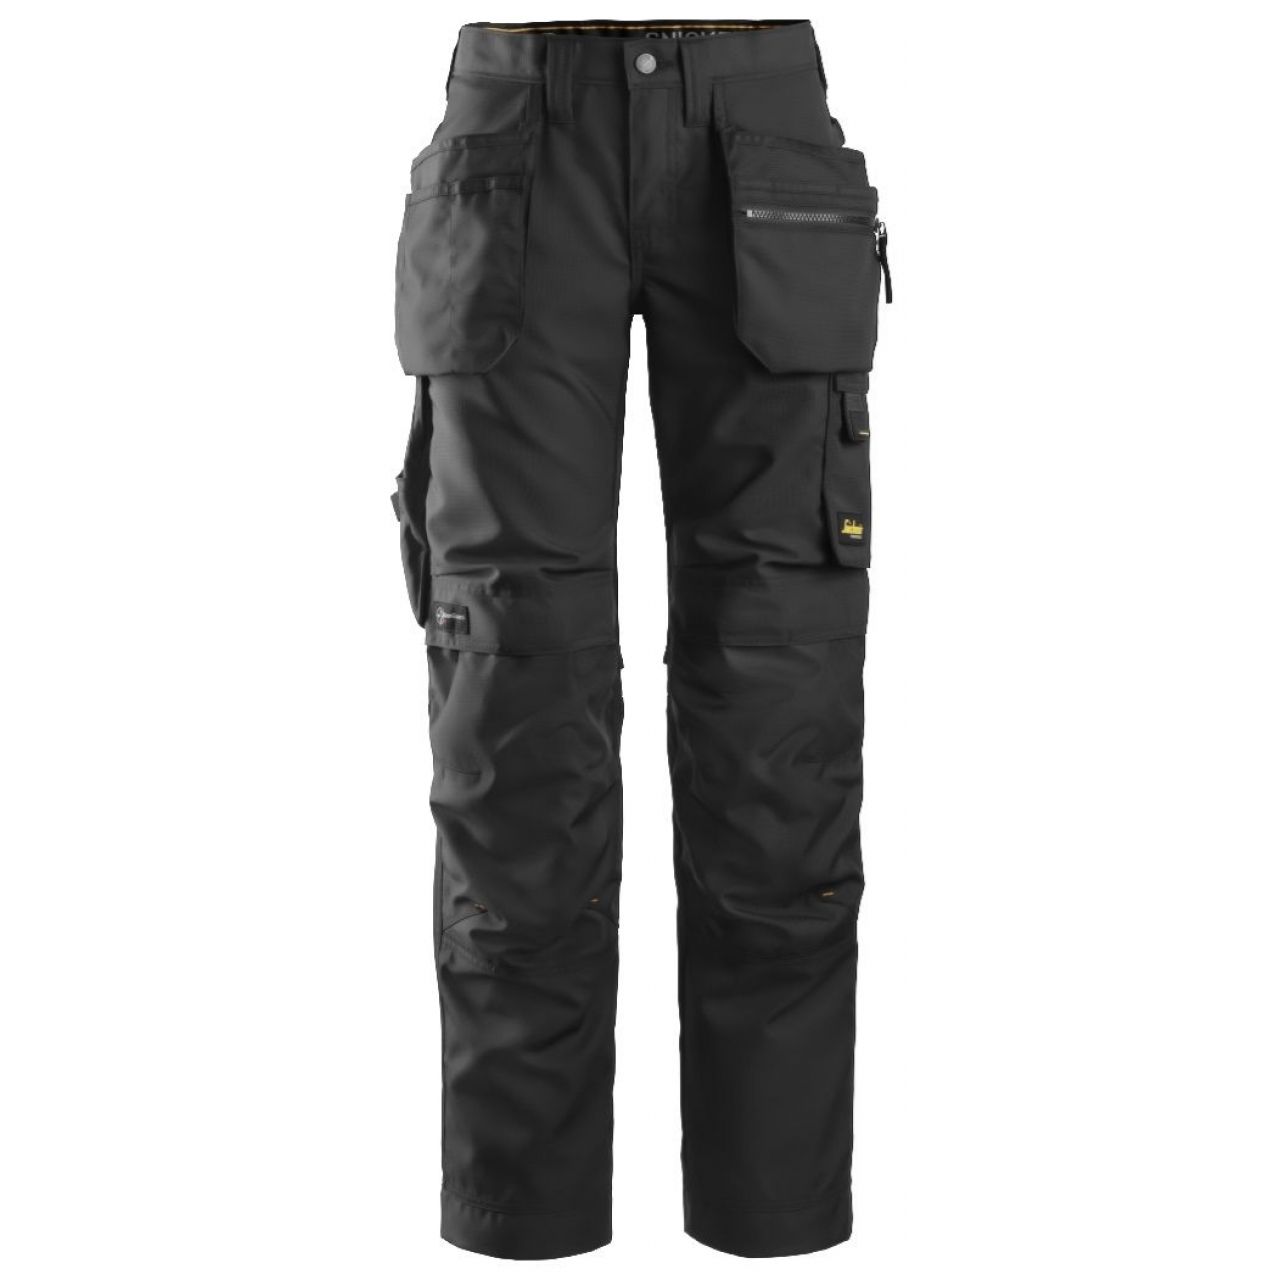 Pantalon de mujer AllroundWork+ con bolsillos flotantes negro talla 036